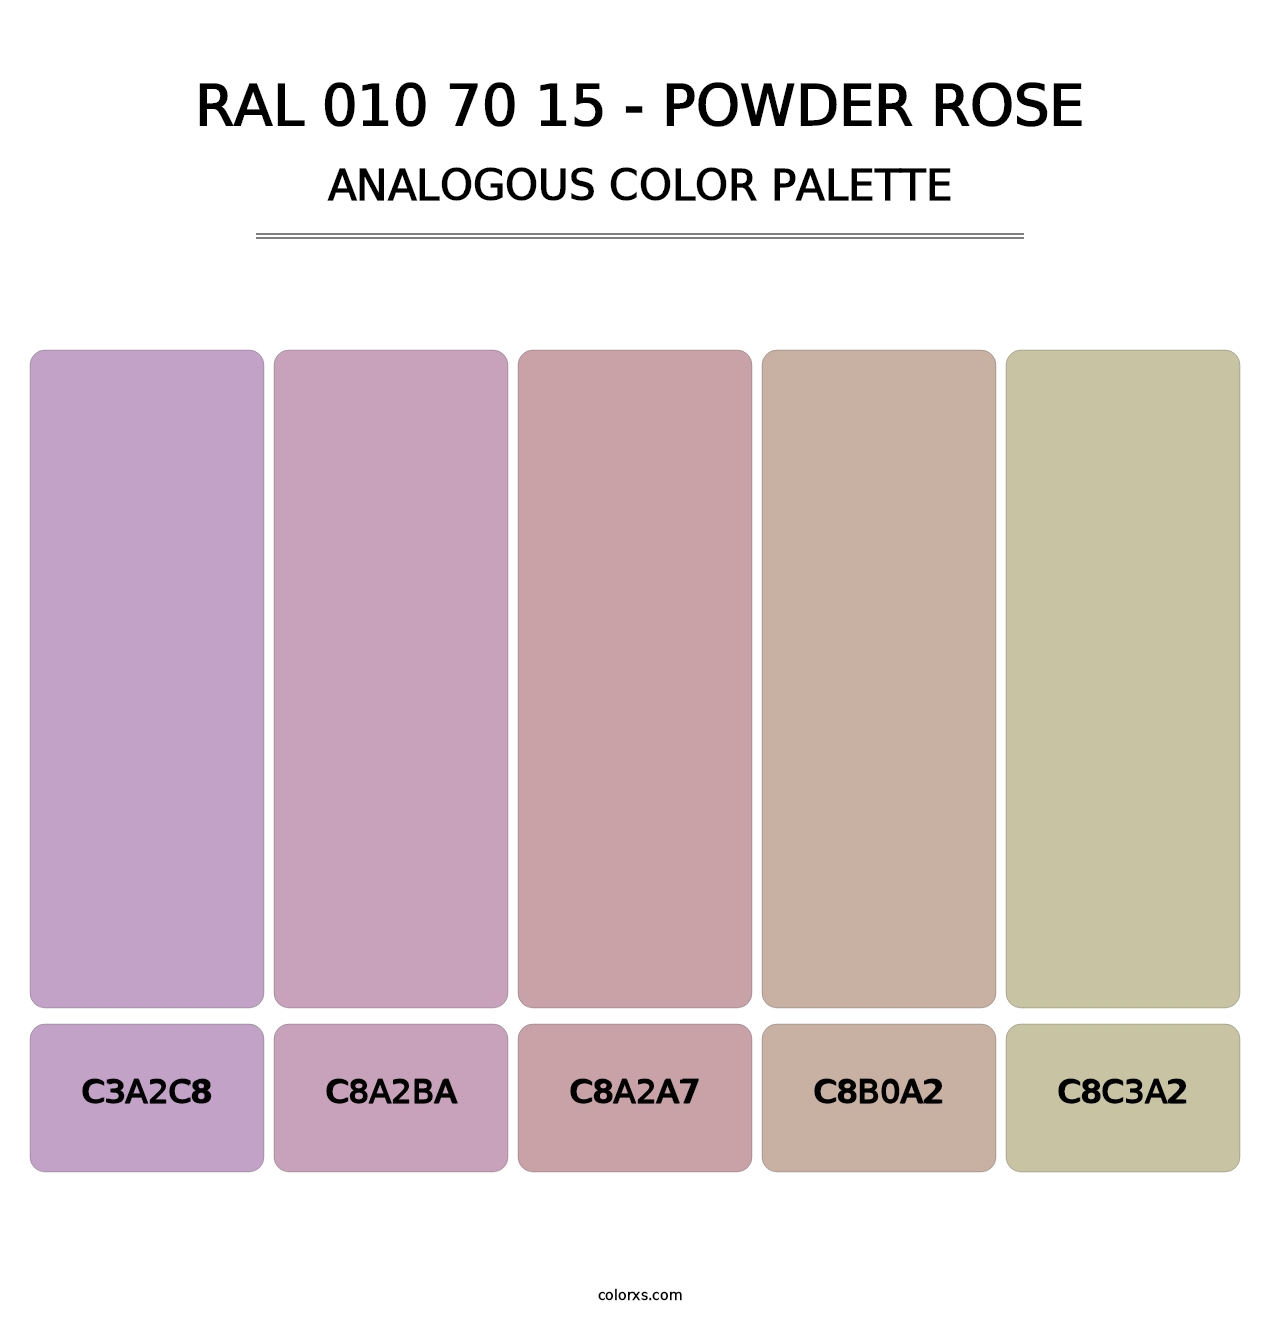 RAL 010 70 15 - Powder Rose - Analogous Color Palette